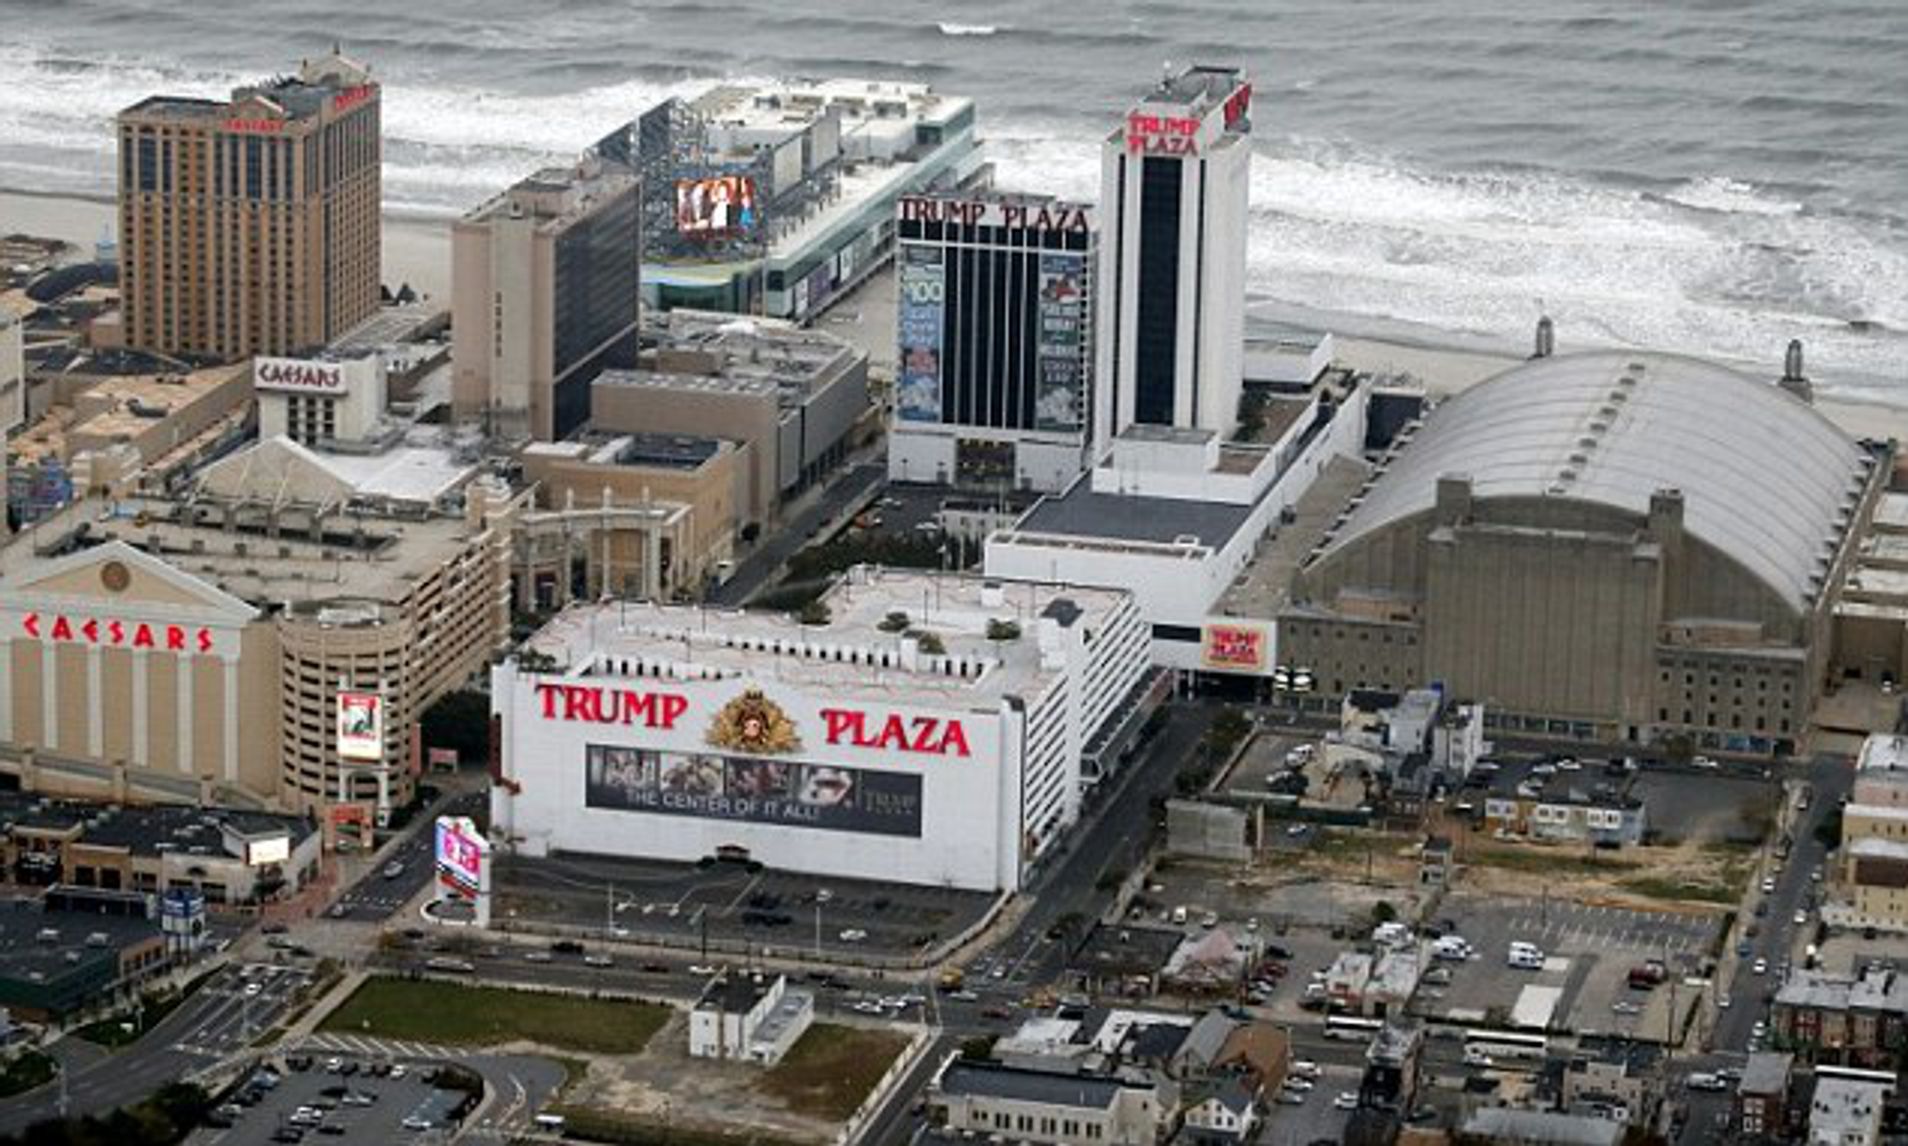 Atlantic City’s former Trump Plaza will be imploded on Feb. 17, mayor says